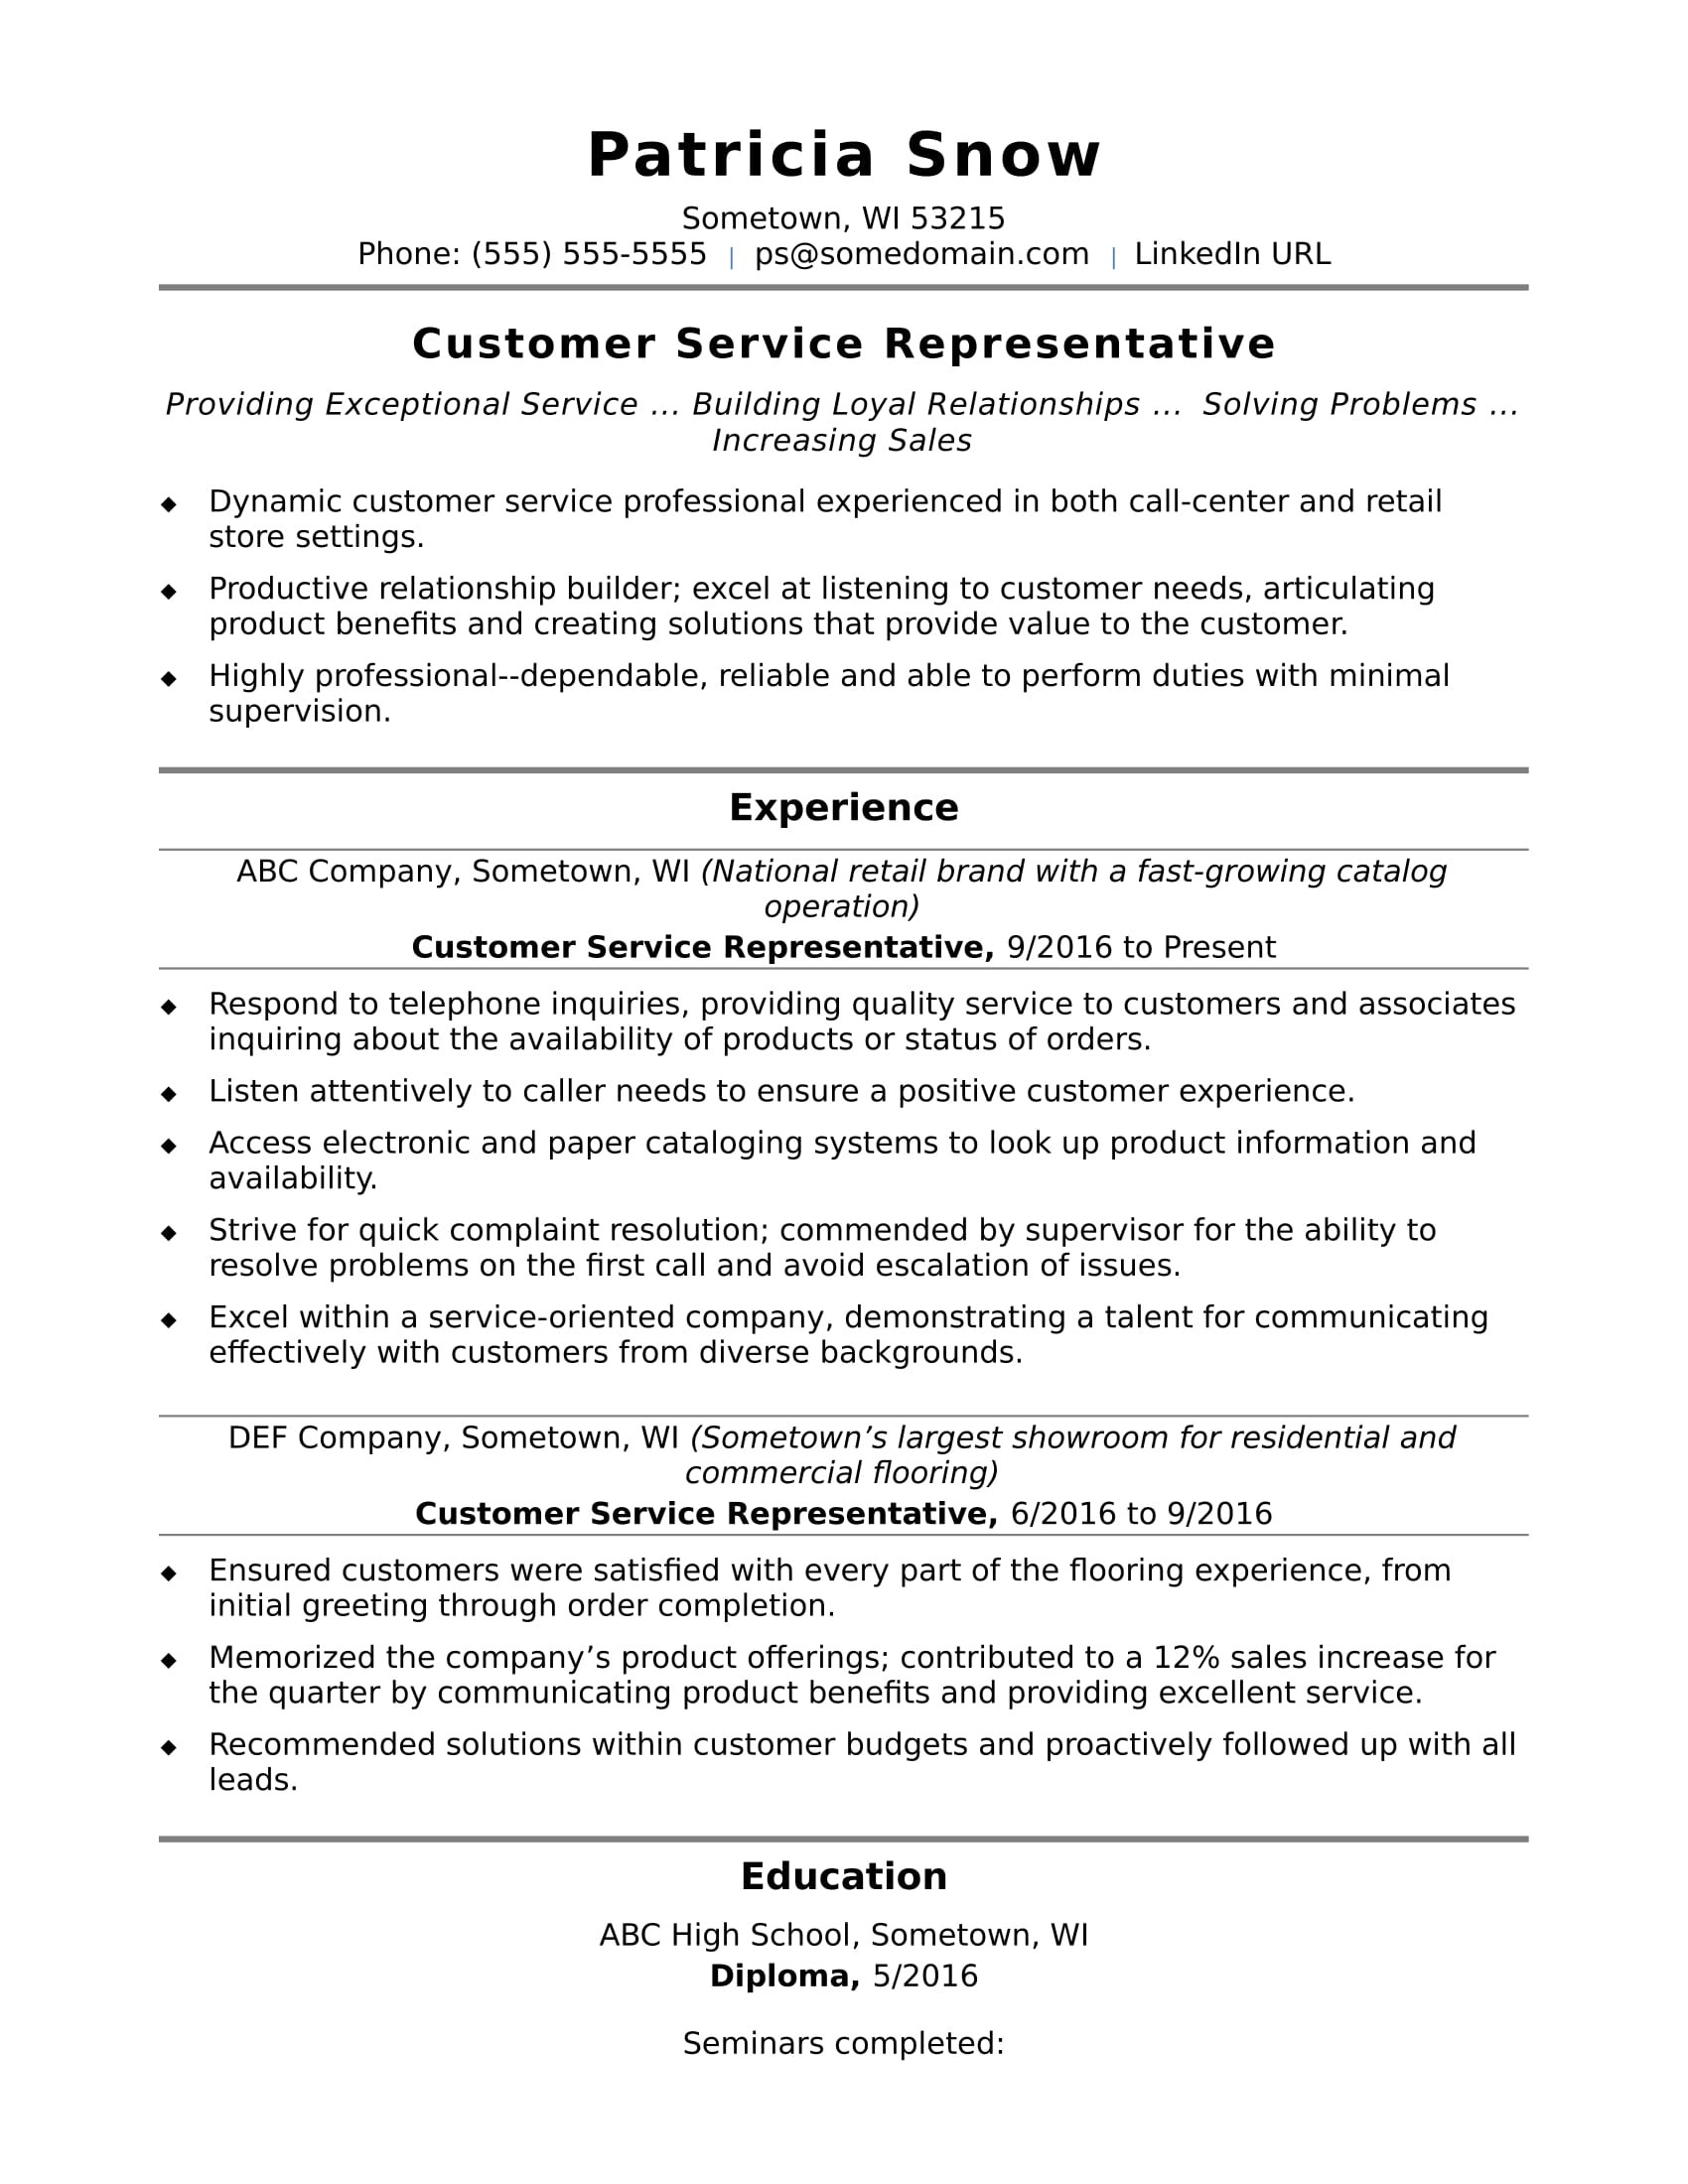 Sample Resume Customer Service Sale Store Entry-level Customer Service Resume Sample Monster.com